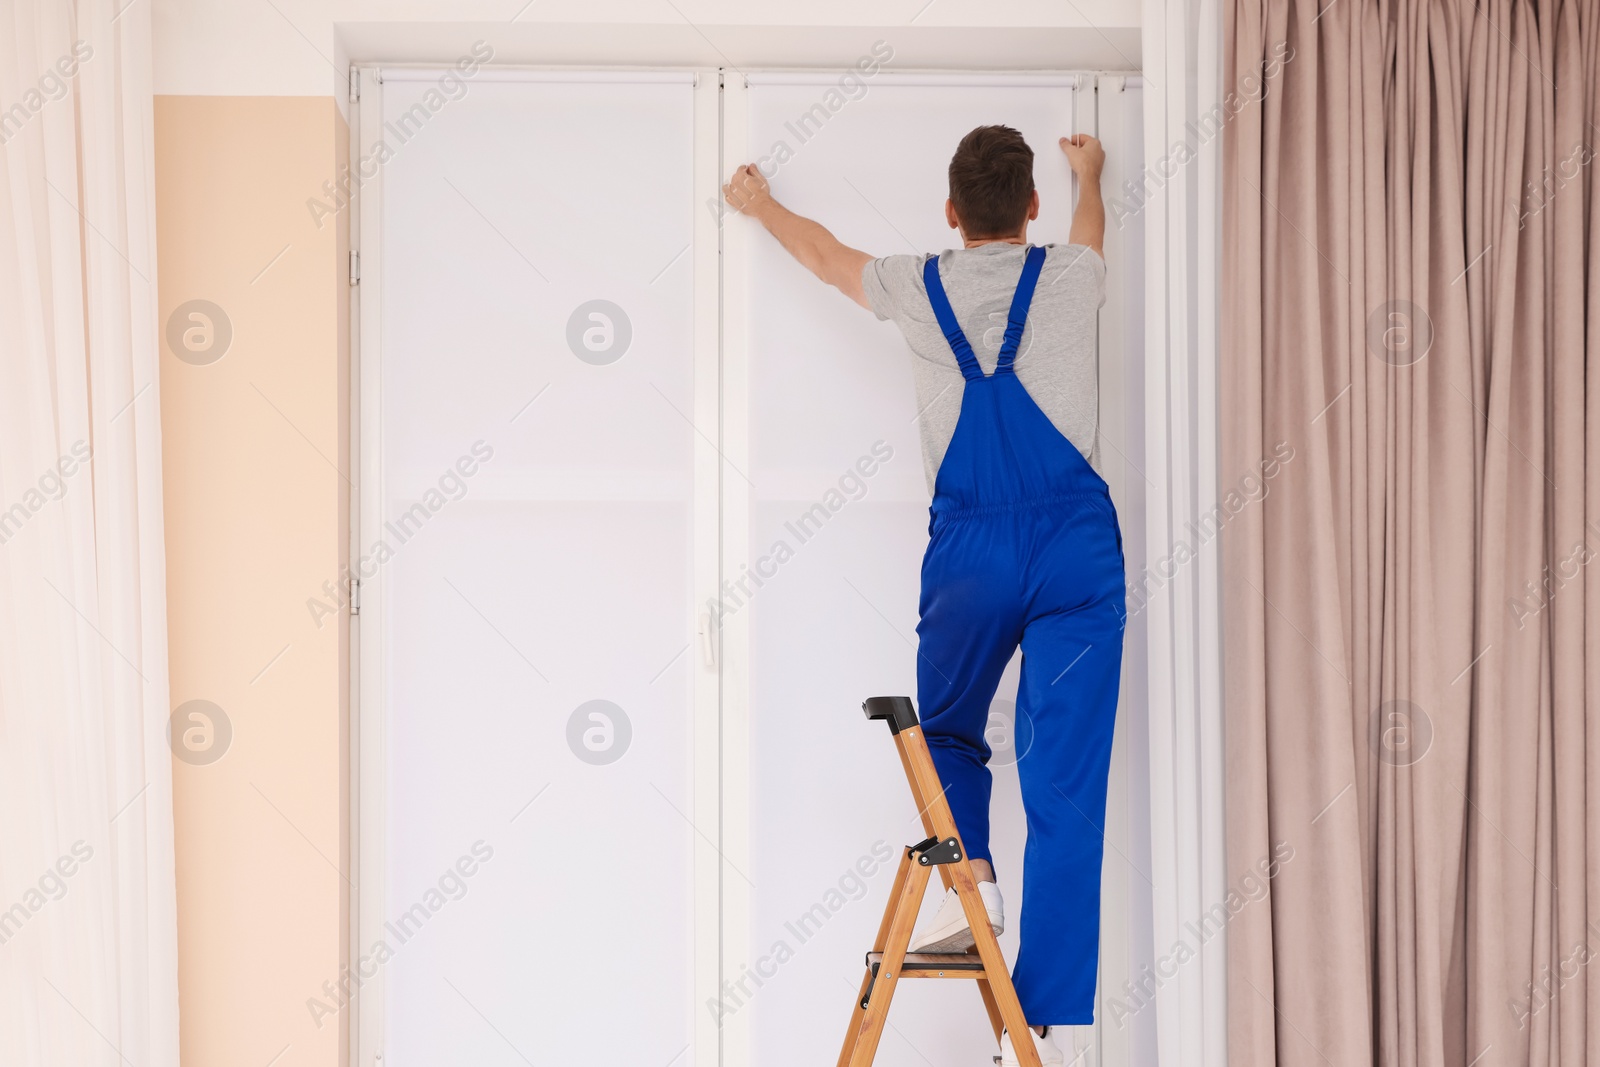 Photo of Worker in uniform installing roller window blind on stepladder indoors, back view